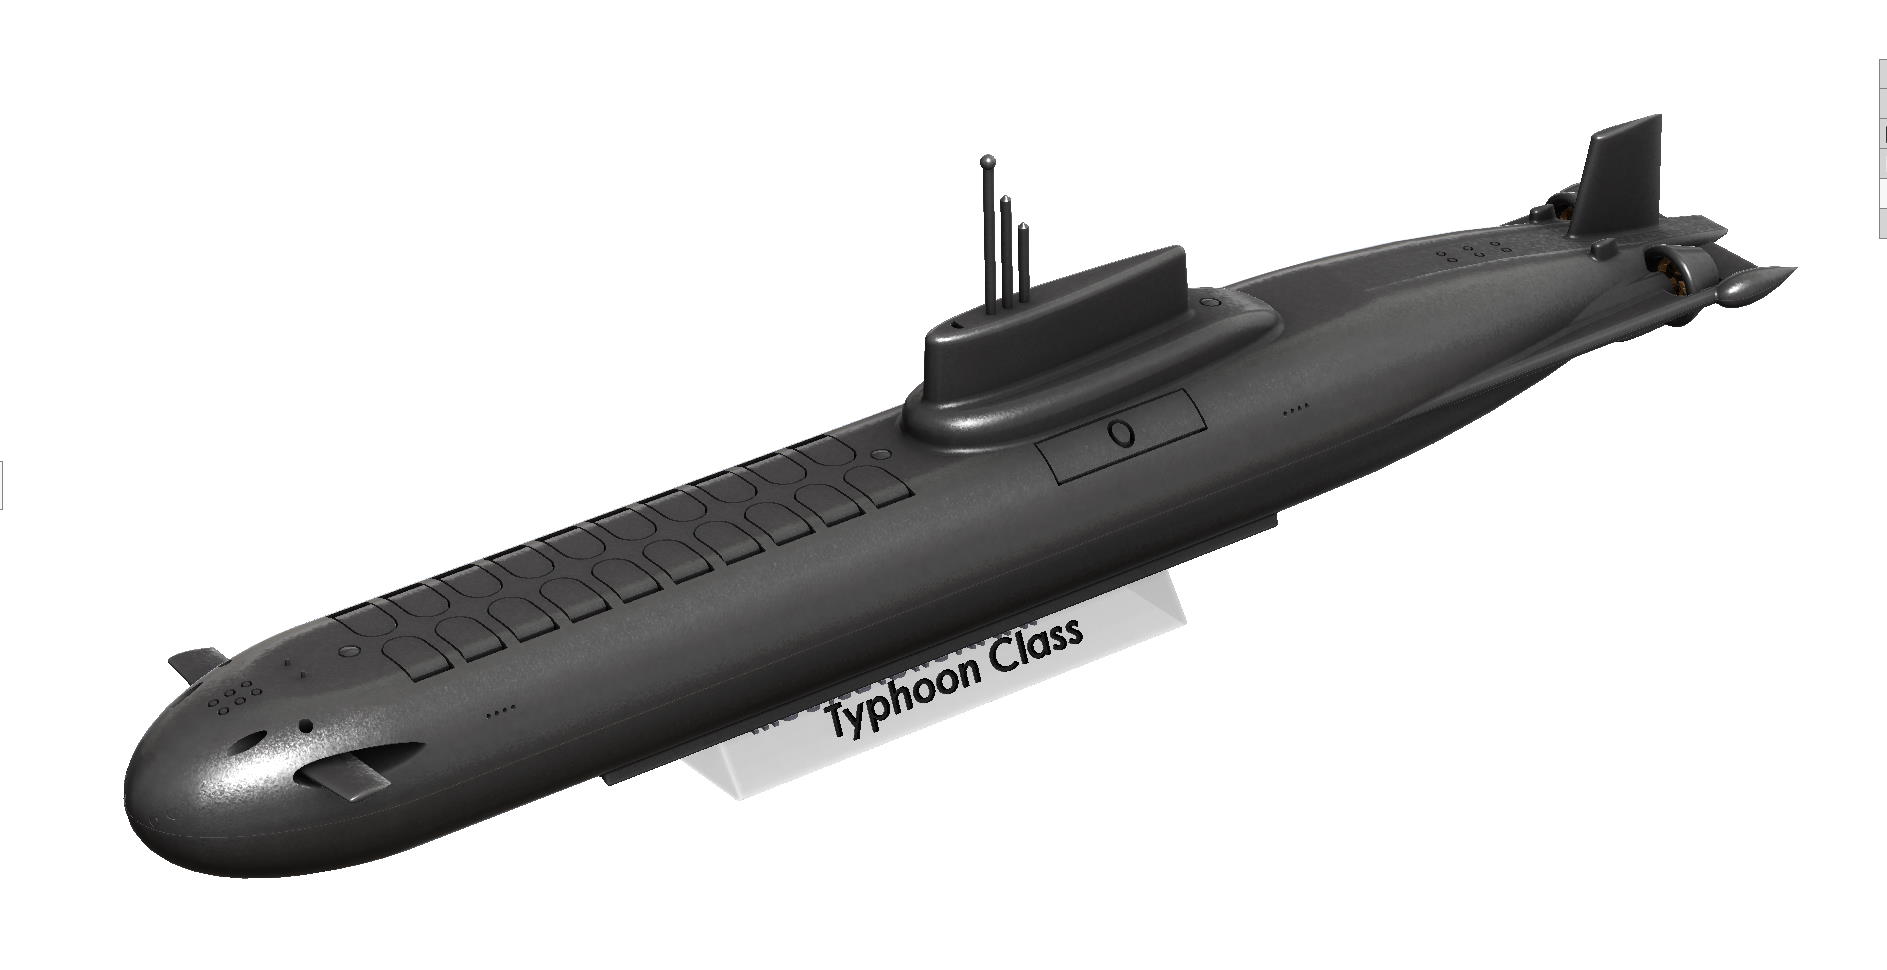 Typhoon Class Submarine Model Endtas